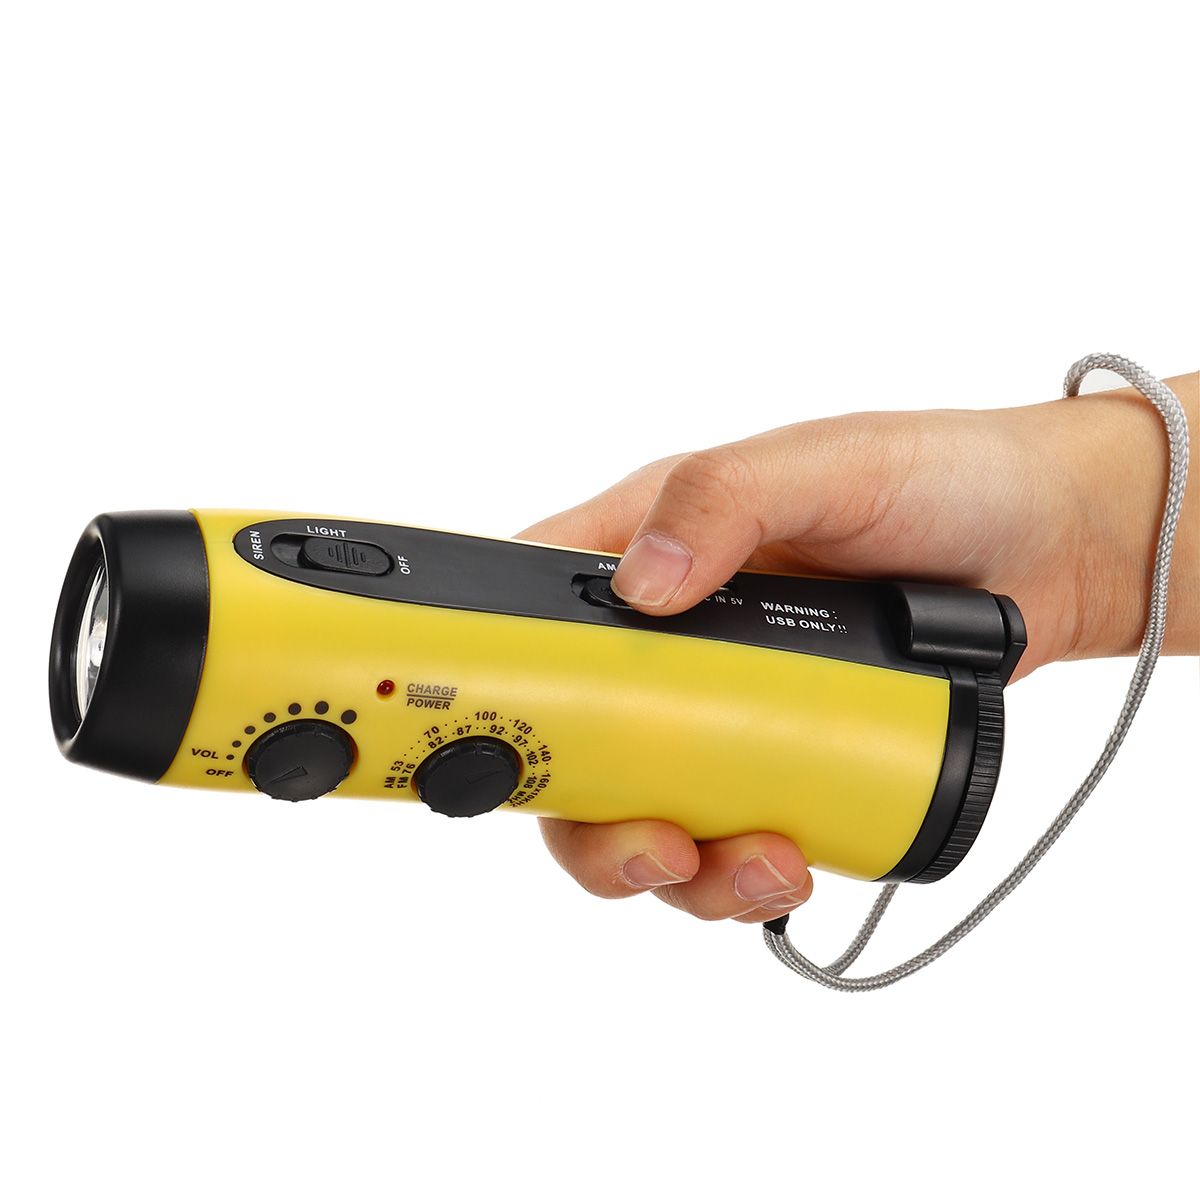 Portable-Emergency-Hand-Crank-AM-FM-WB-NOAA-Solar-Weather-Radio-with-Alarm-LED-Flashlight-Power-Bank-1688500